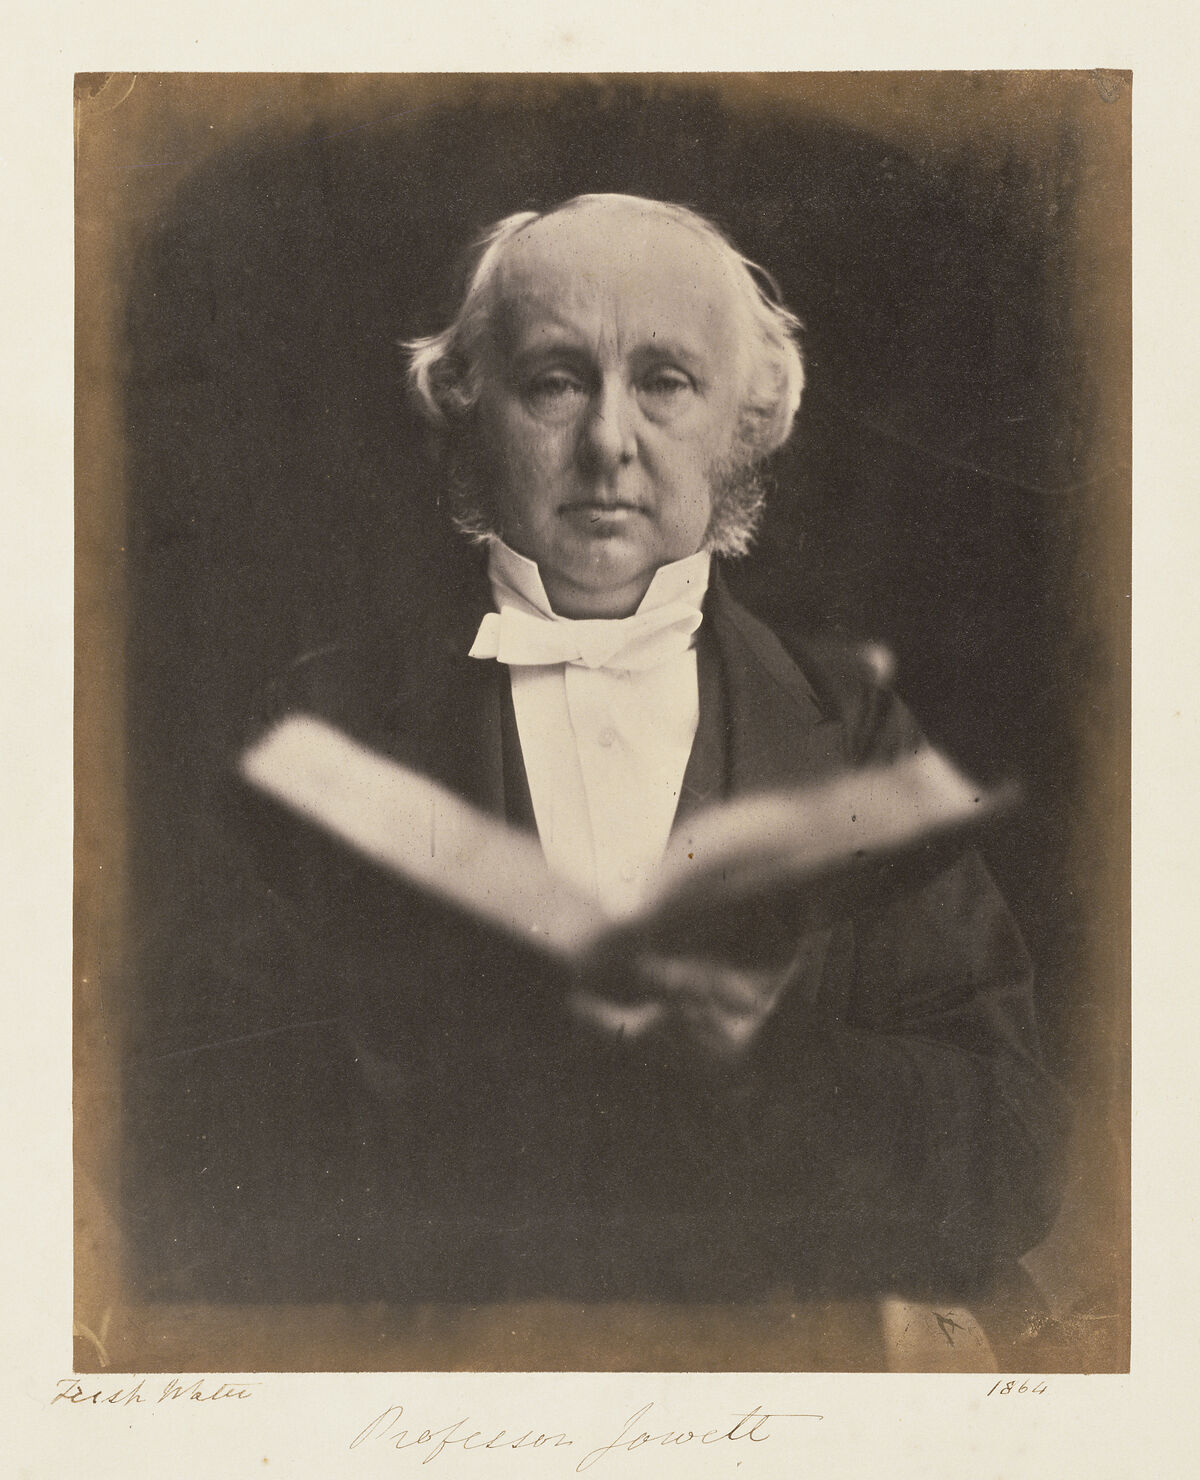 Julia Margaret Cameron, Professor [Benjamin] Jowett, 1864. Photo via The J. Paul Getty Museum.